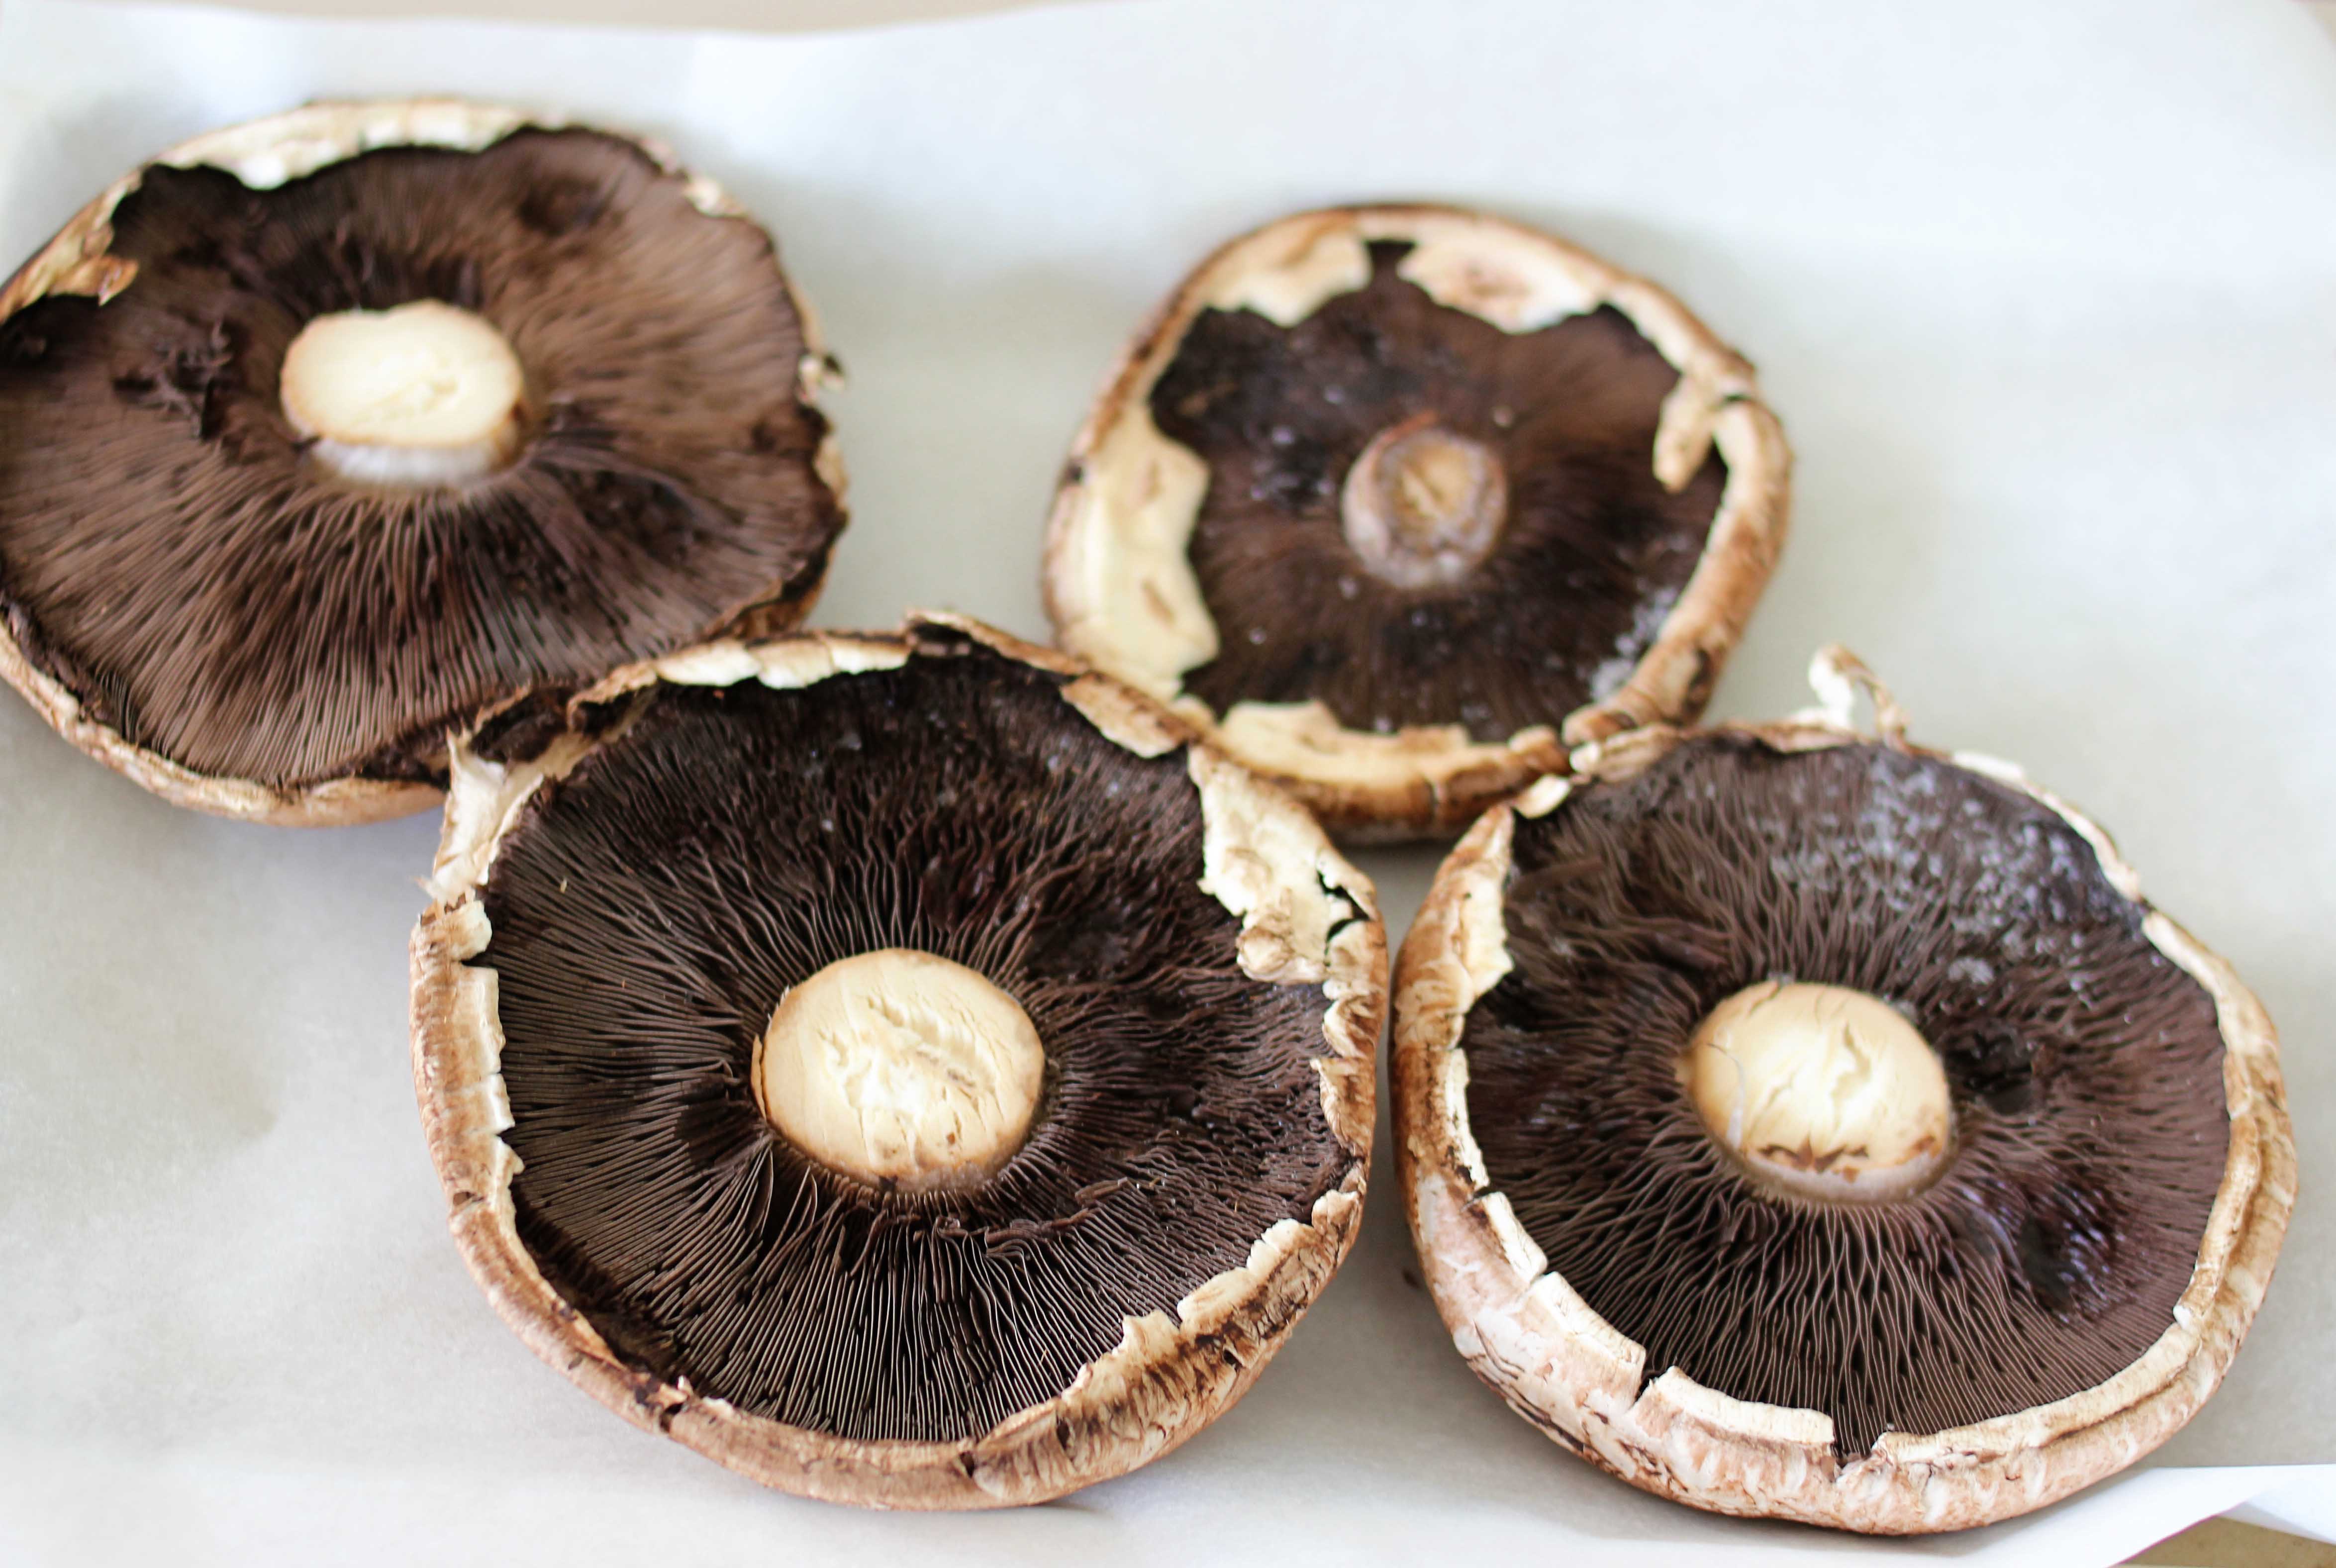 An old mushroom photo